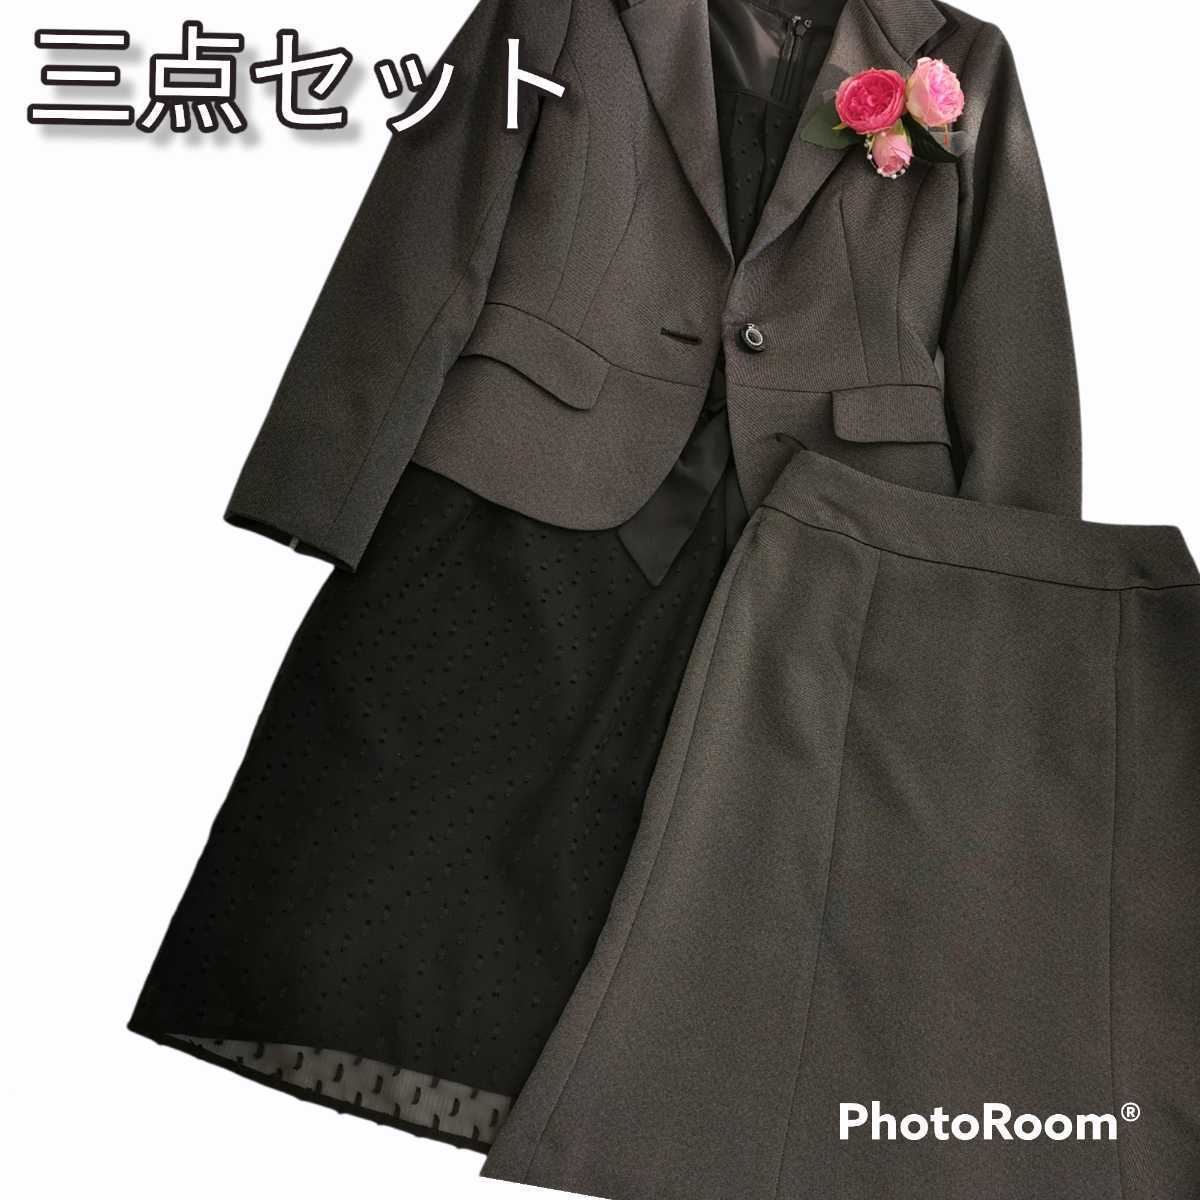  esprit шлепанцы костюм юбка One-piece комплект из трех позиций размер 7